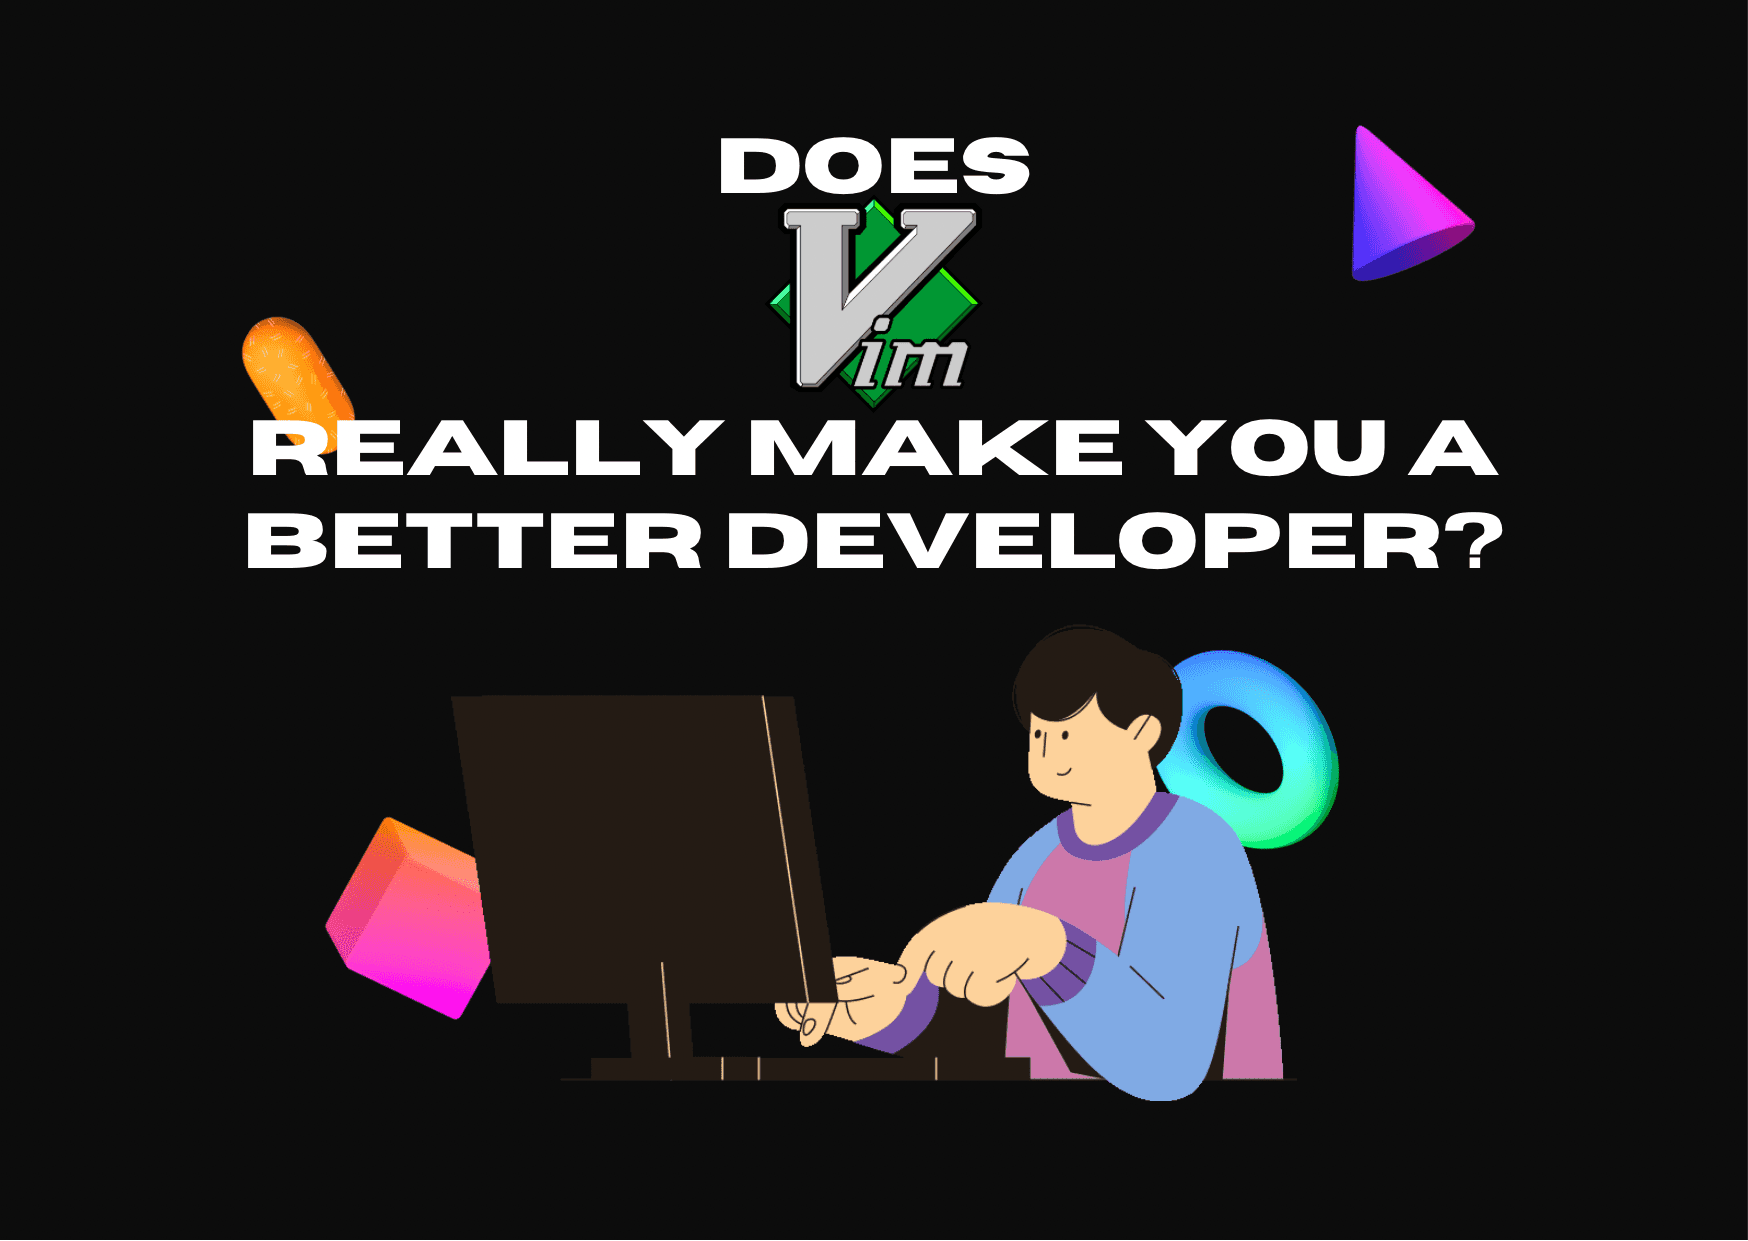 Does VIM really make you a better developer? image